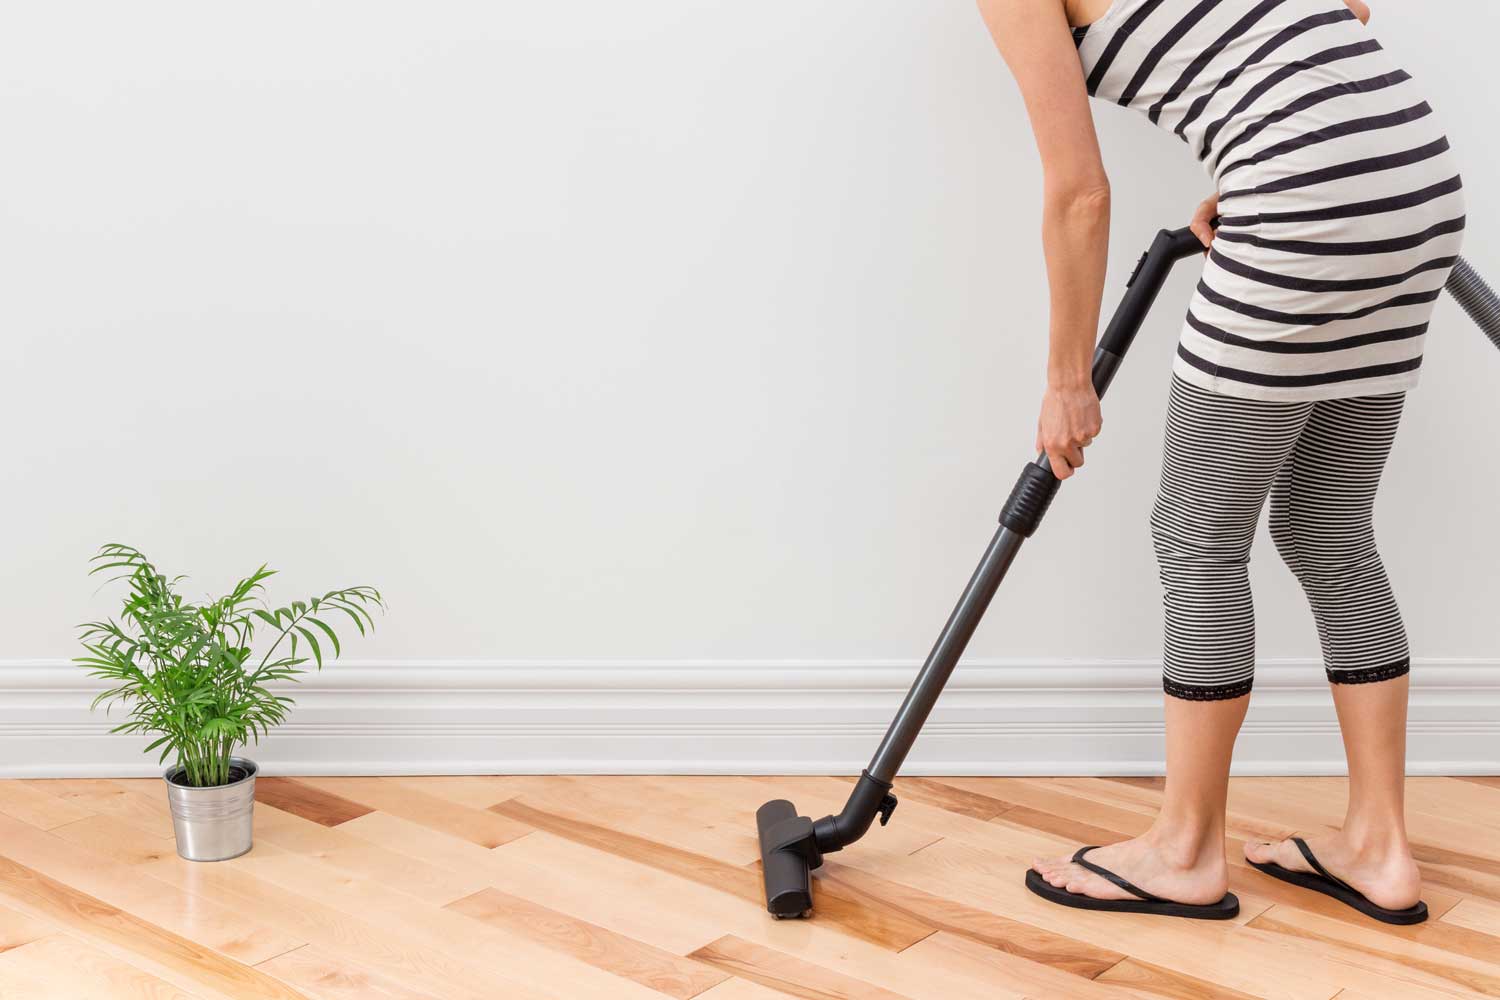 Regulary vacuum or sweep floors to remove dirt and keep your home floors looking amazing - tips from Footprints Floors in San Antonio.